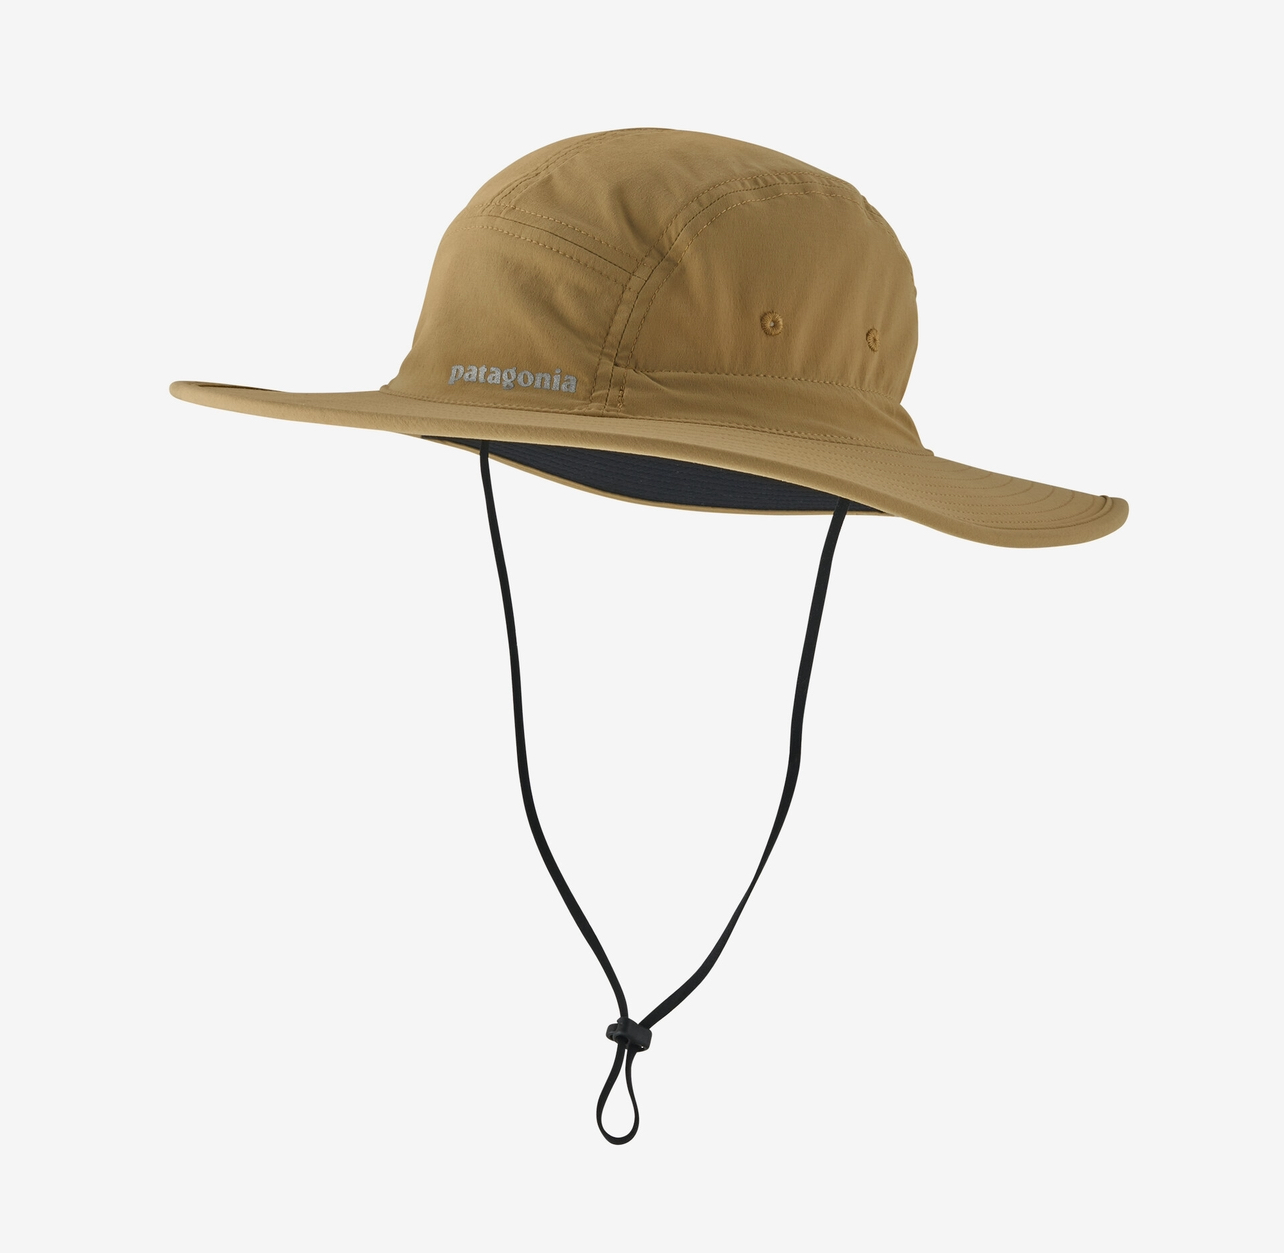 Patagonia Quandary Brimmer Hat - Classic Tan - S/M